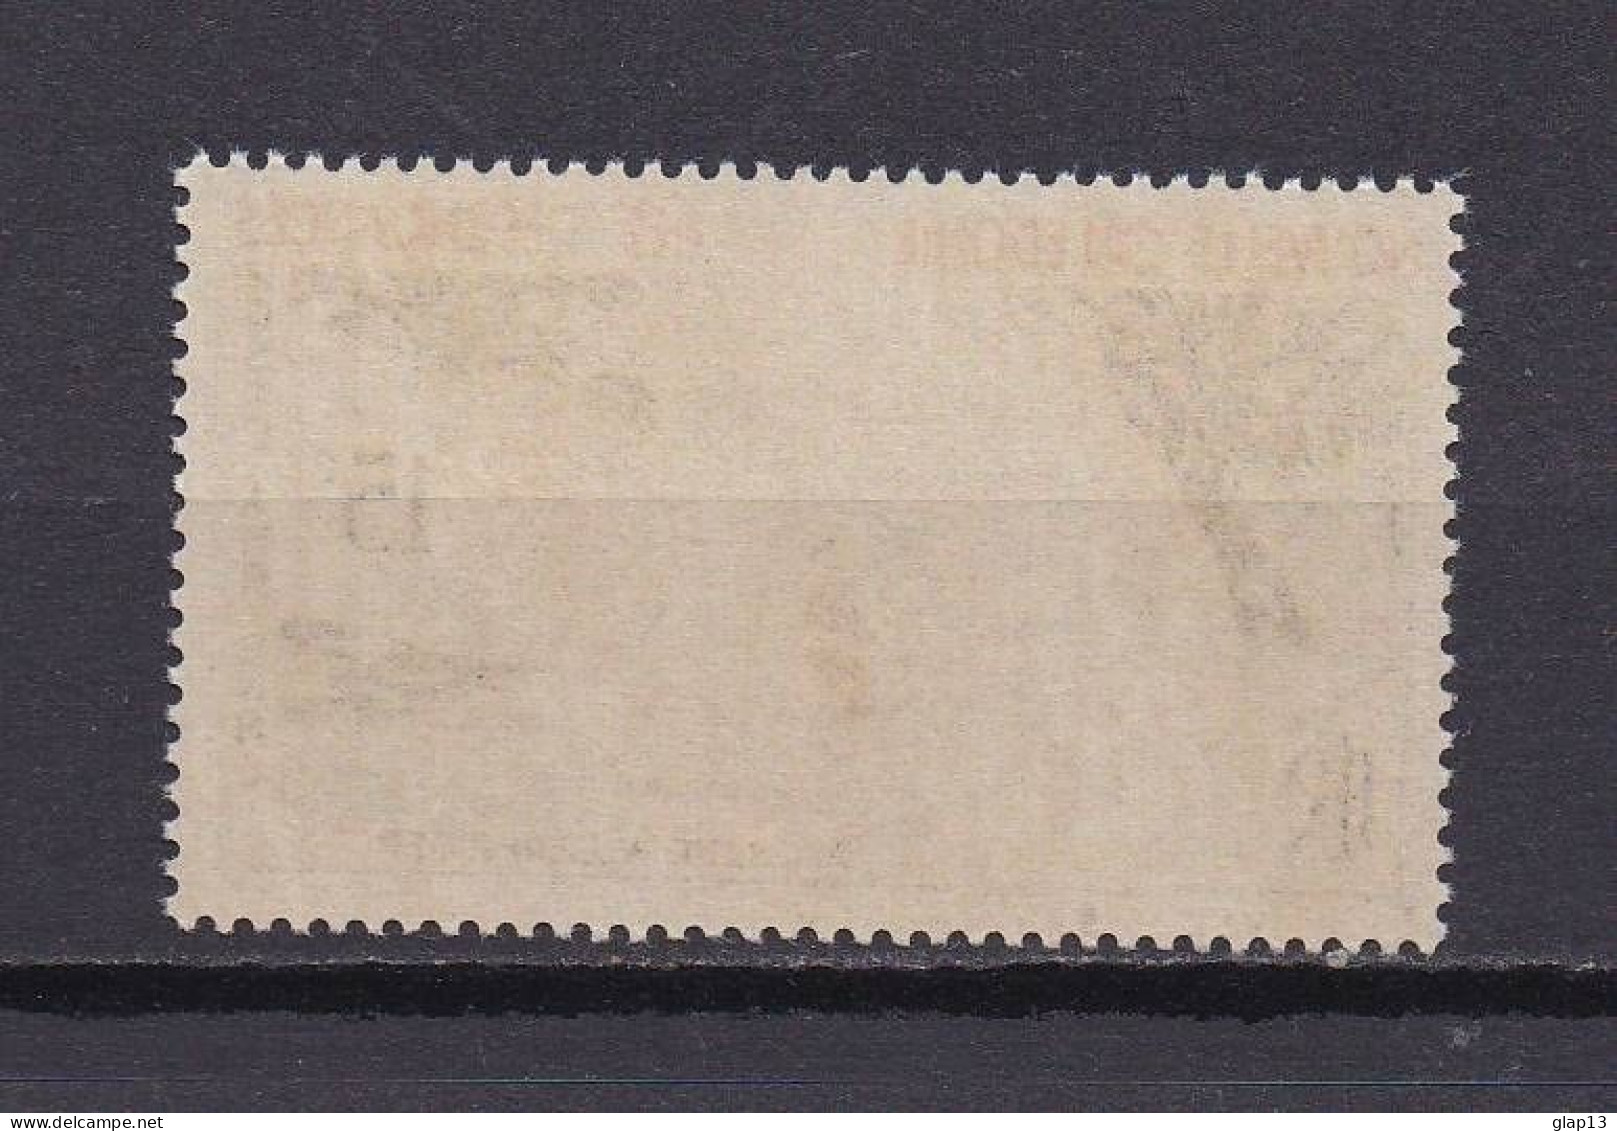 NOUVELLE-CALEDONIE 1955 PA N°67 NEUF** LA PECHE - Unused Stamps